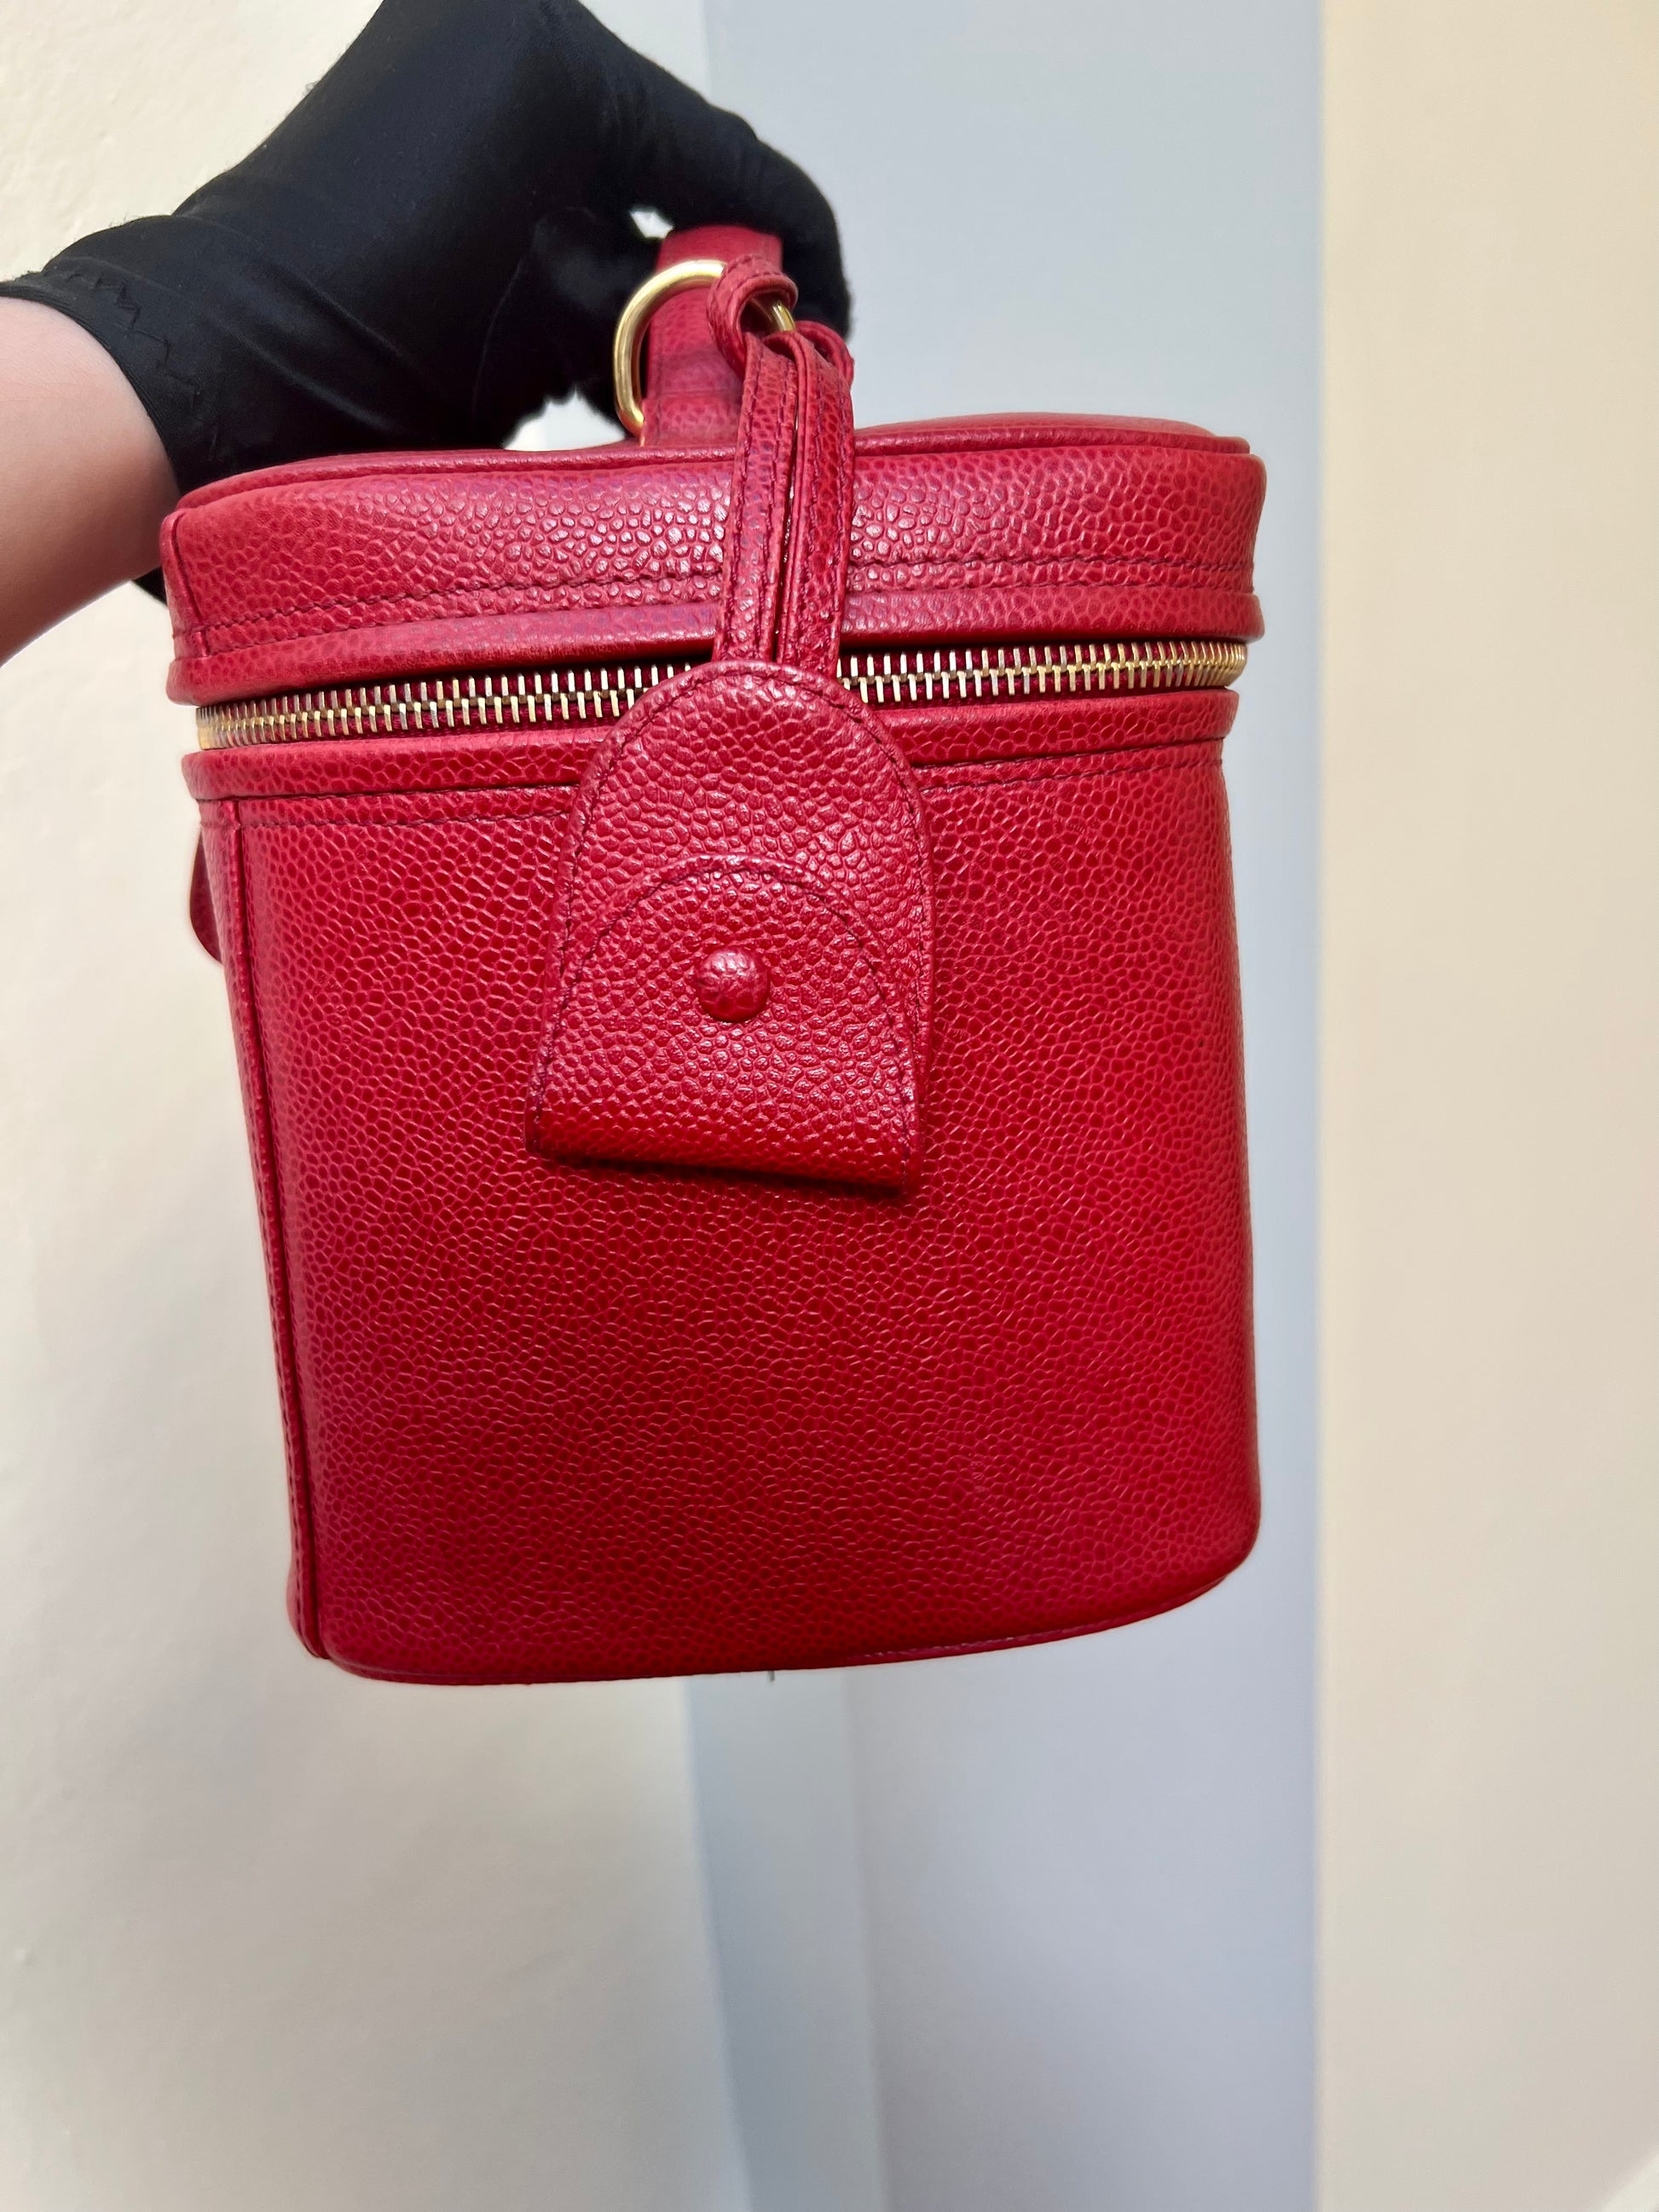 Pre-loved Chanel Vintage CC Caviar Vanity Case Leather Handbag Red